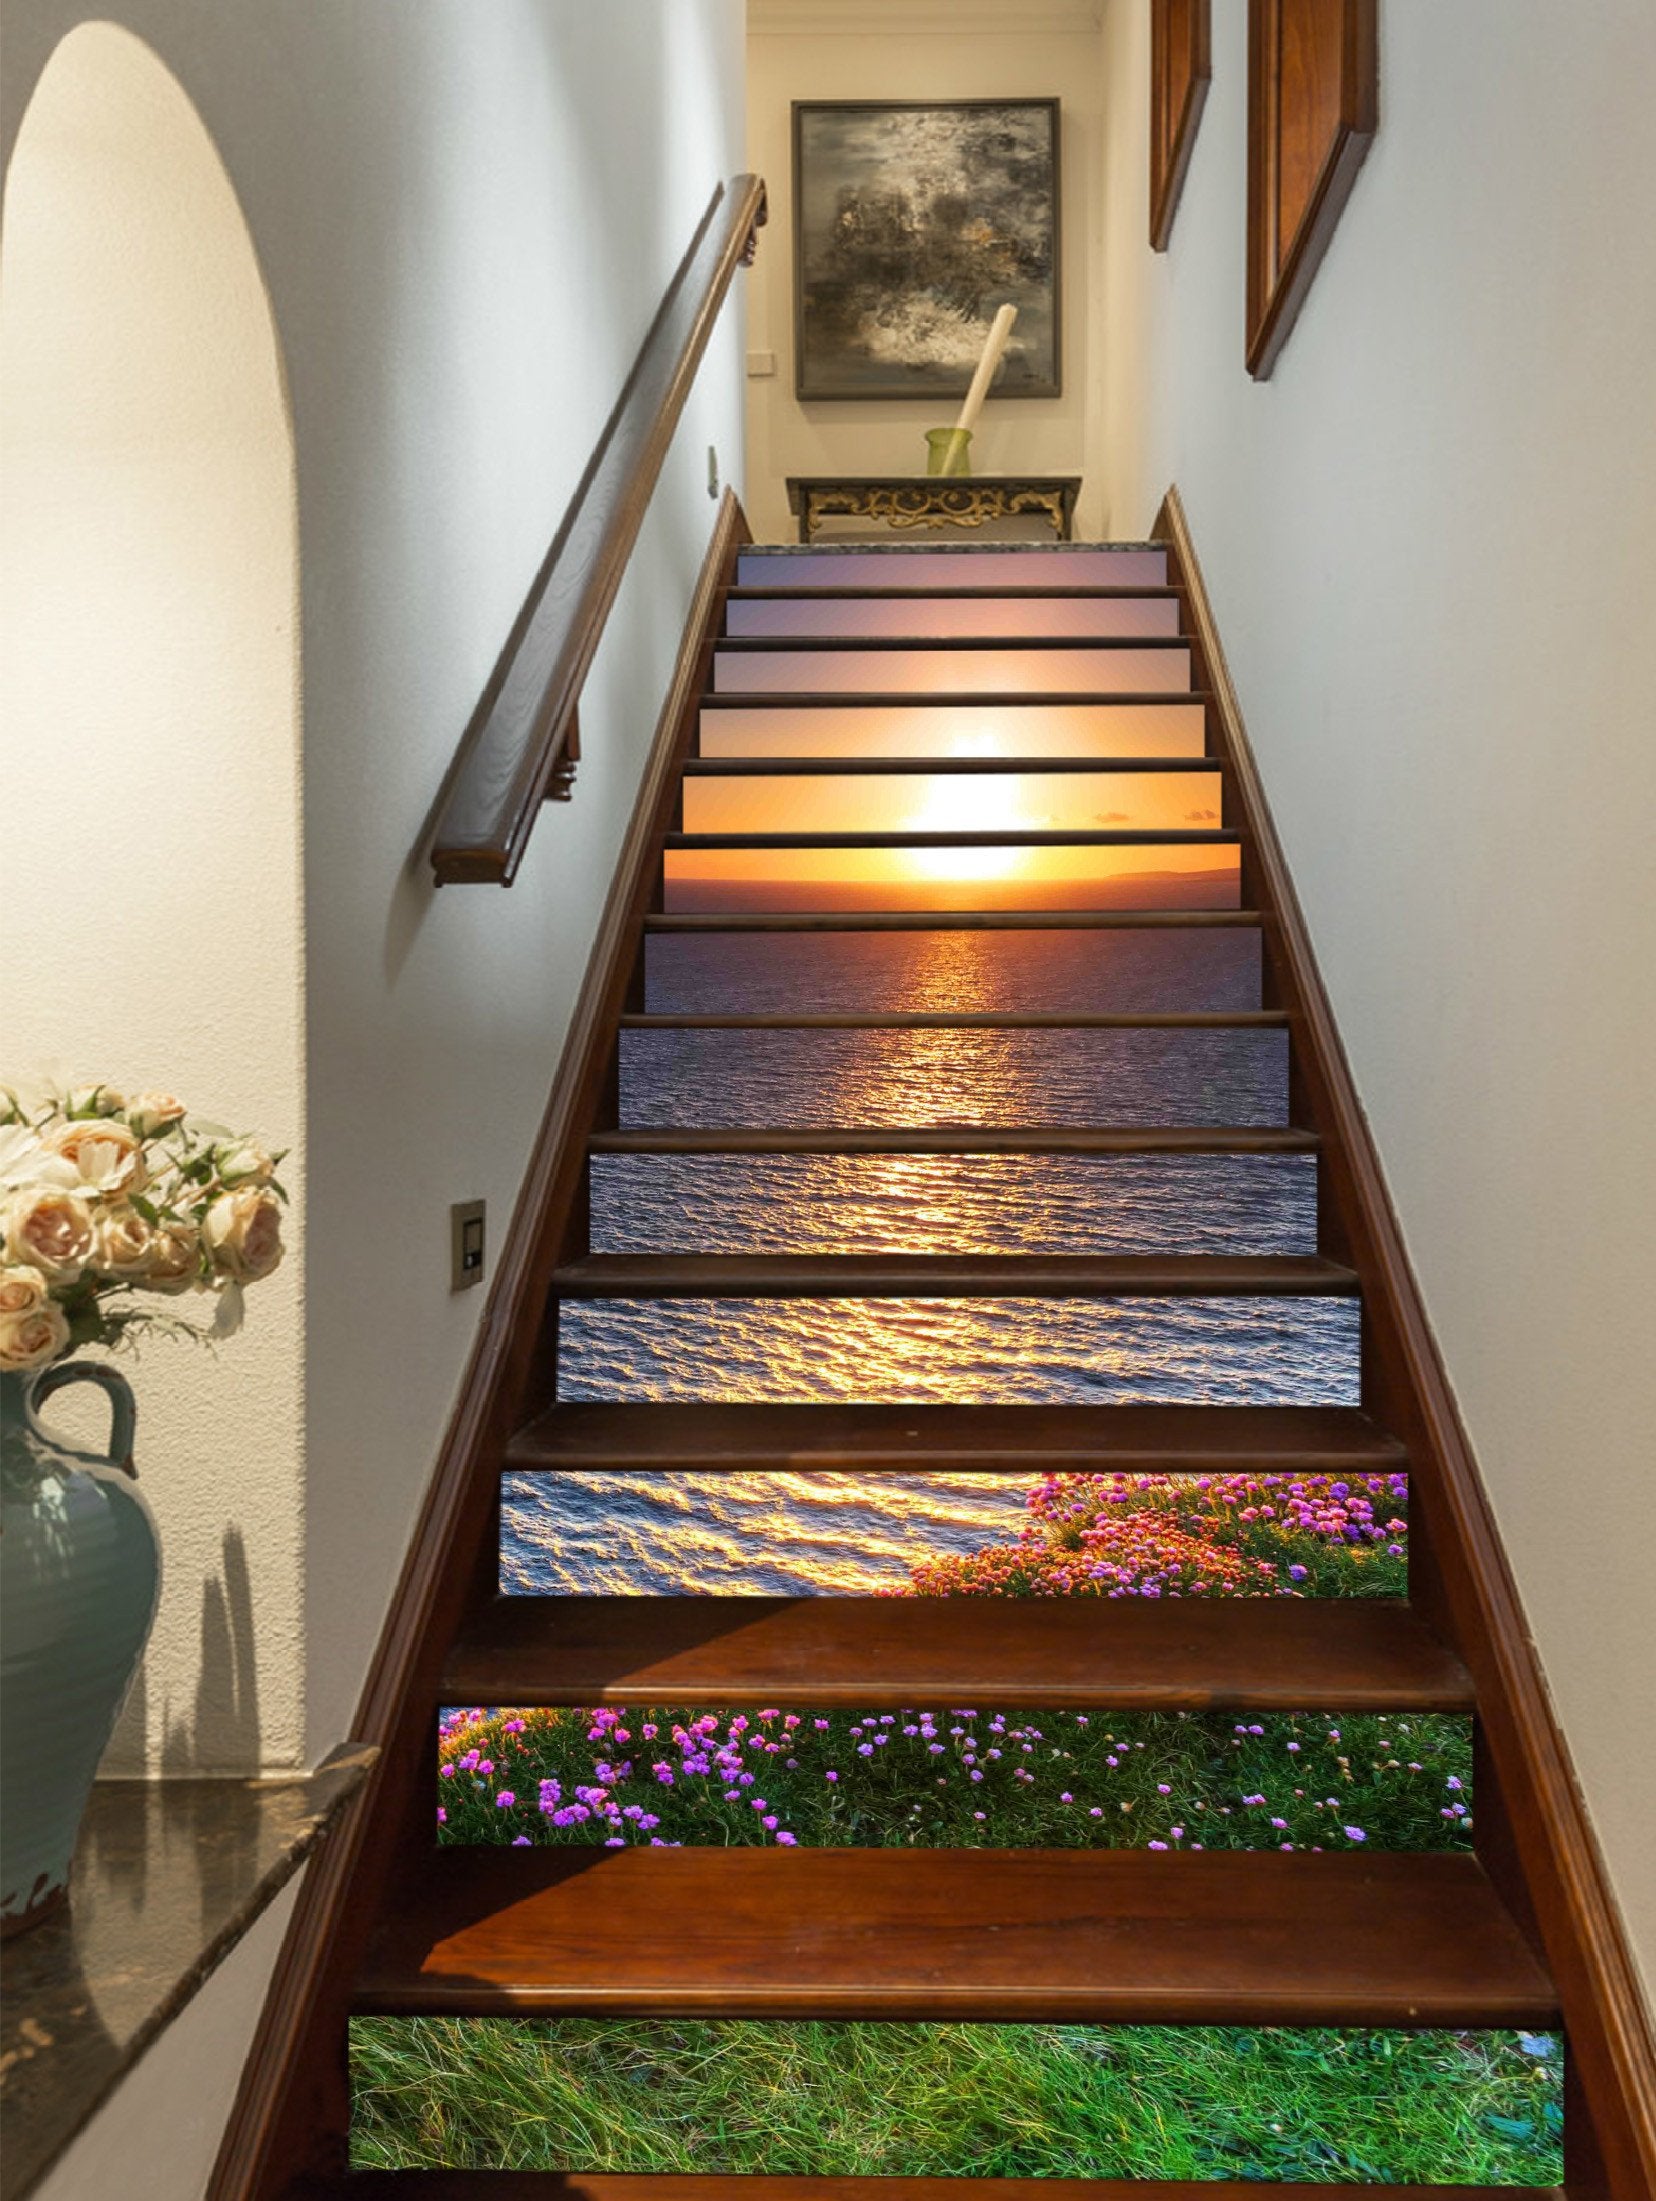 3D Sea Sunset Flowers 728 Stair Risers Wallpaper AJ Wallpaper 